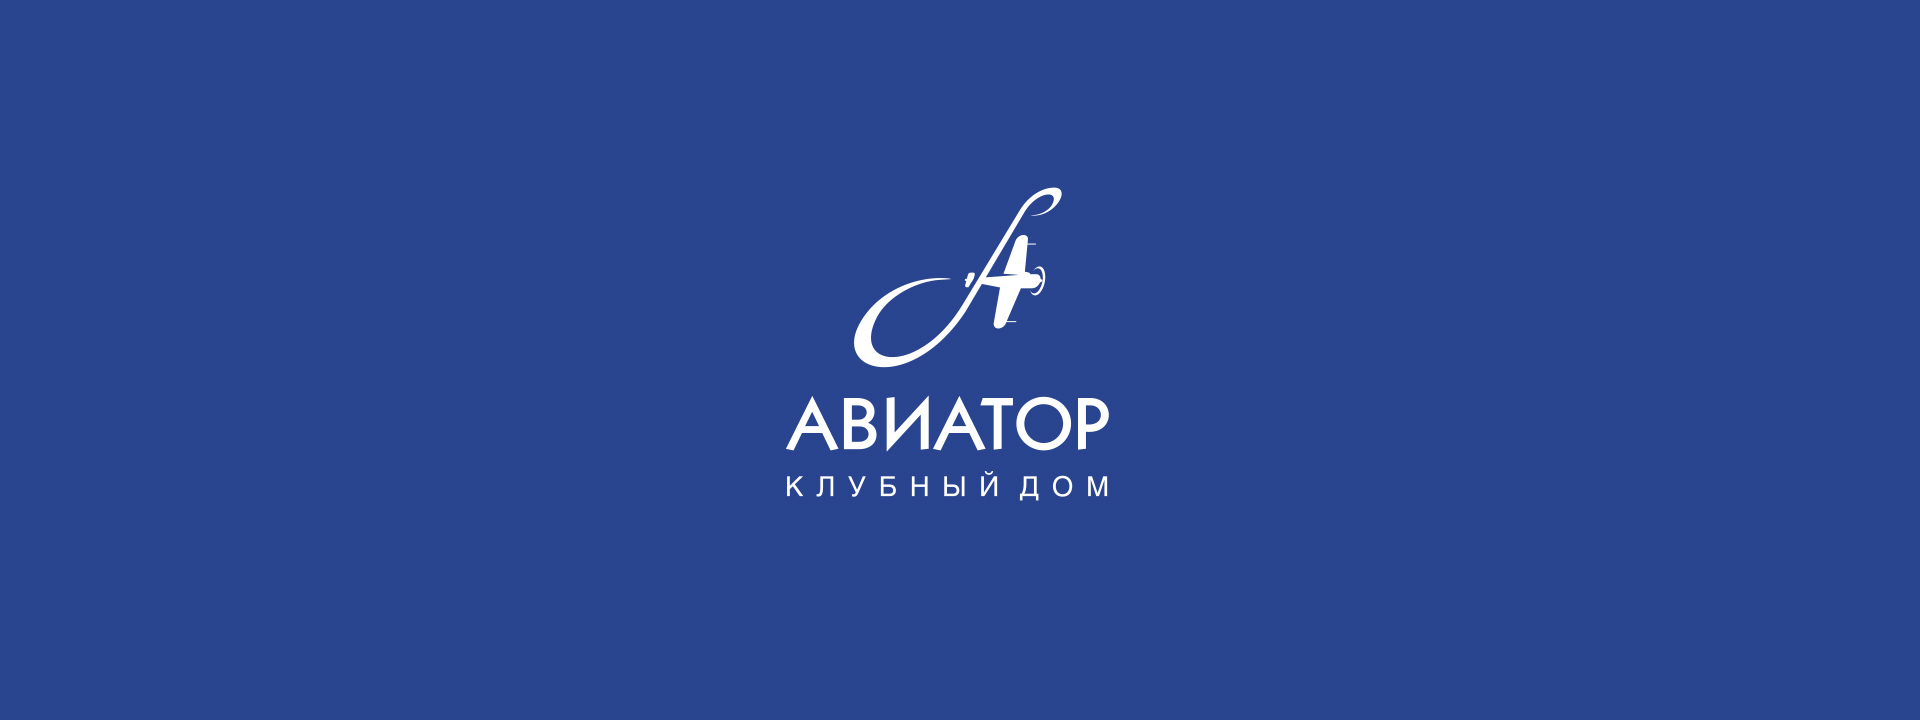 Логотип ЖК Авиатор